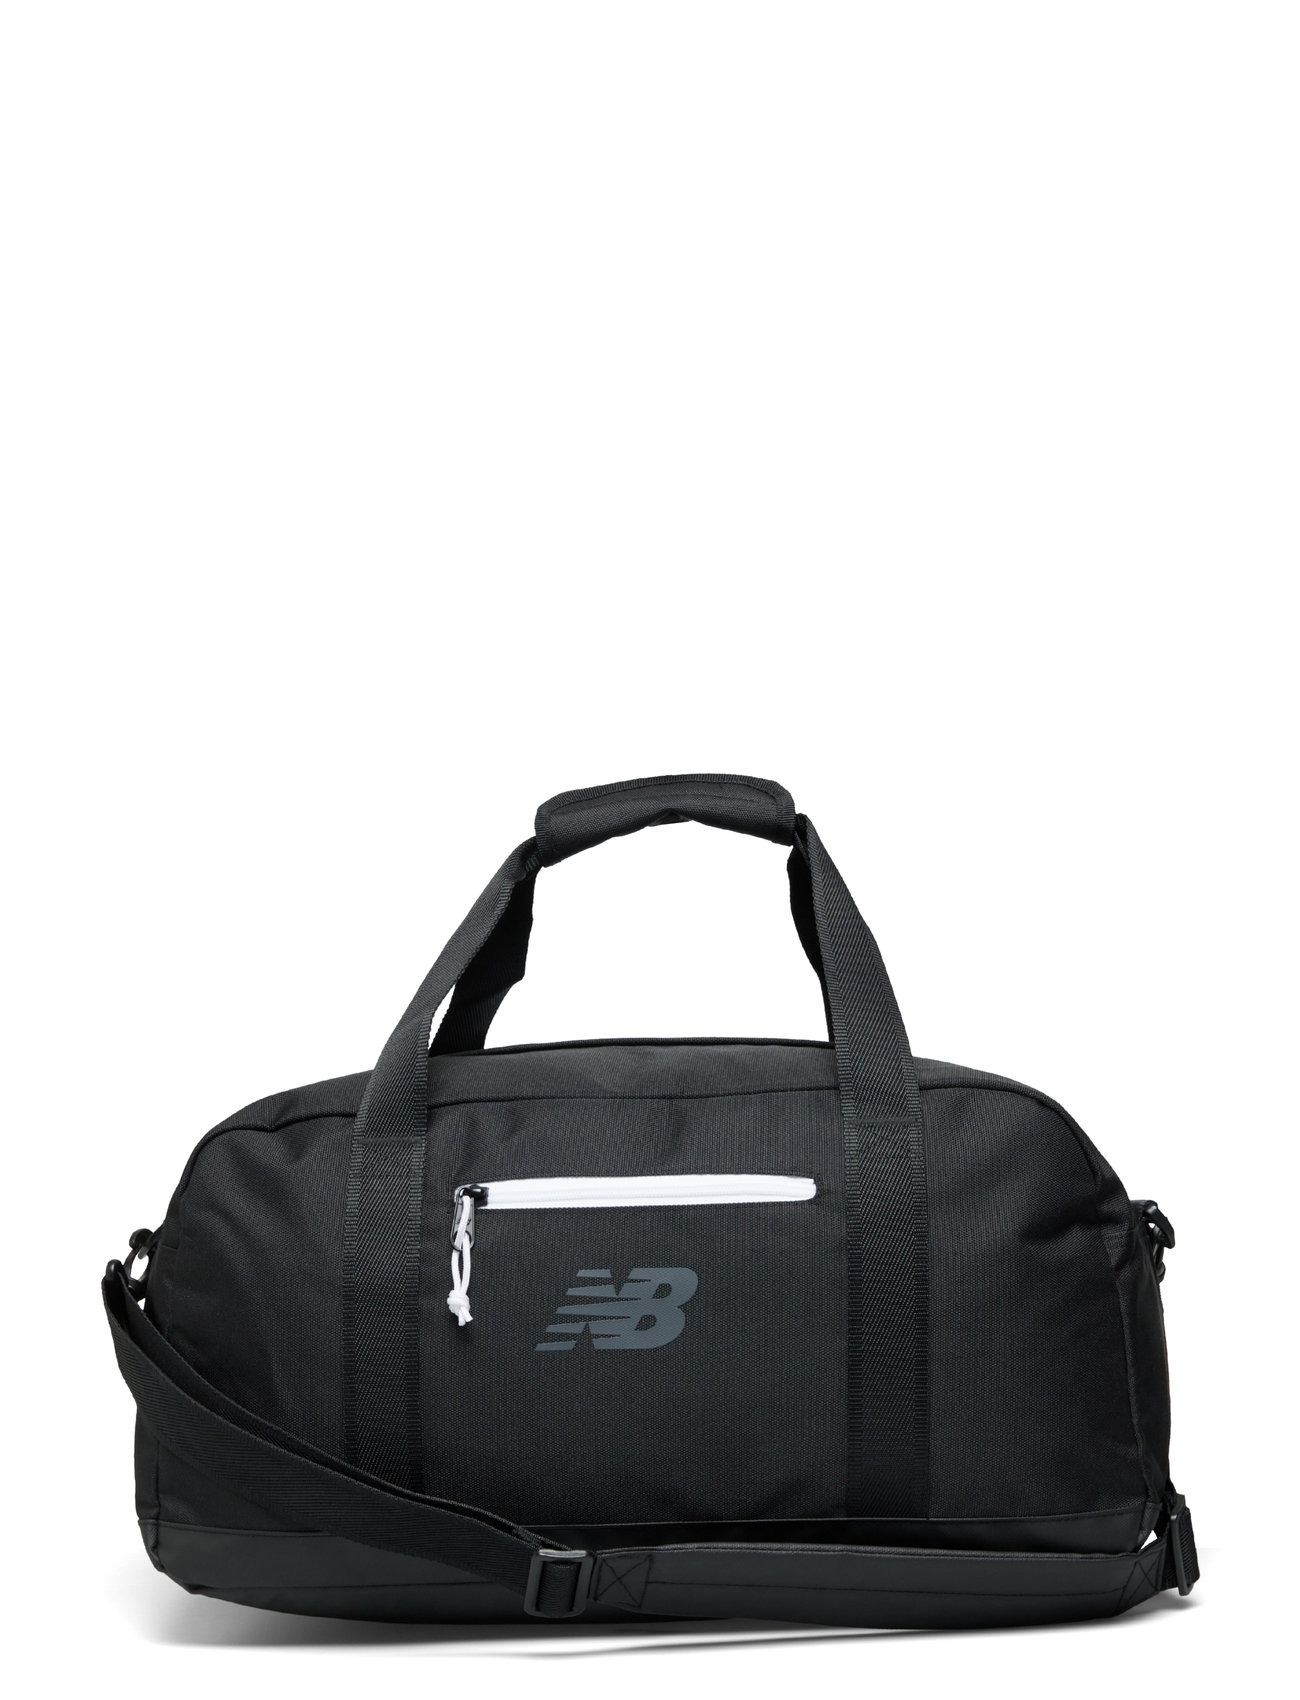 Basic Duffel Bag Sport Gym Bags Black New Balance